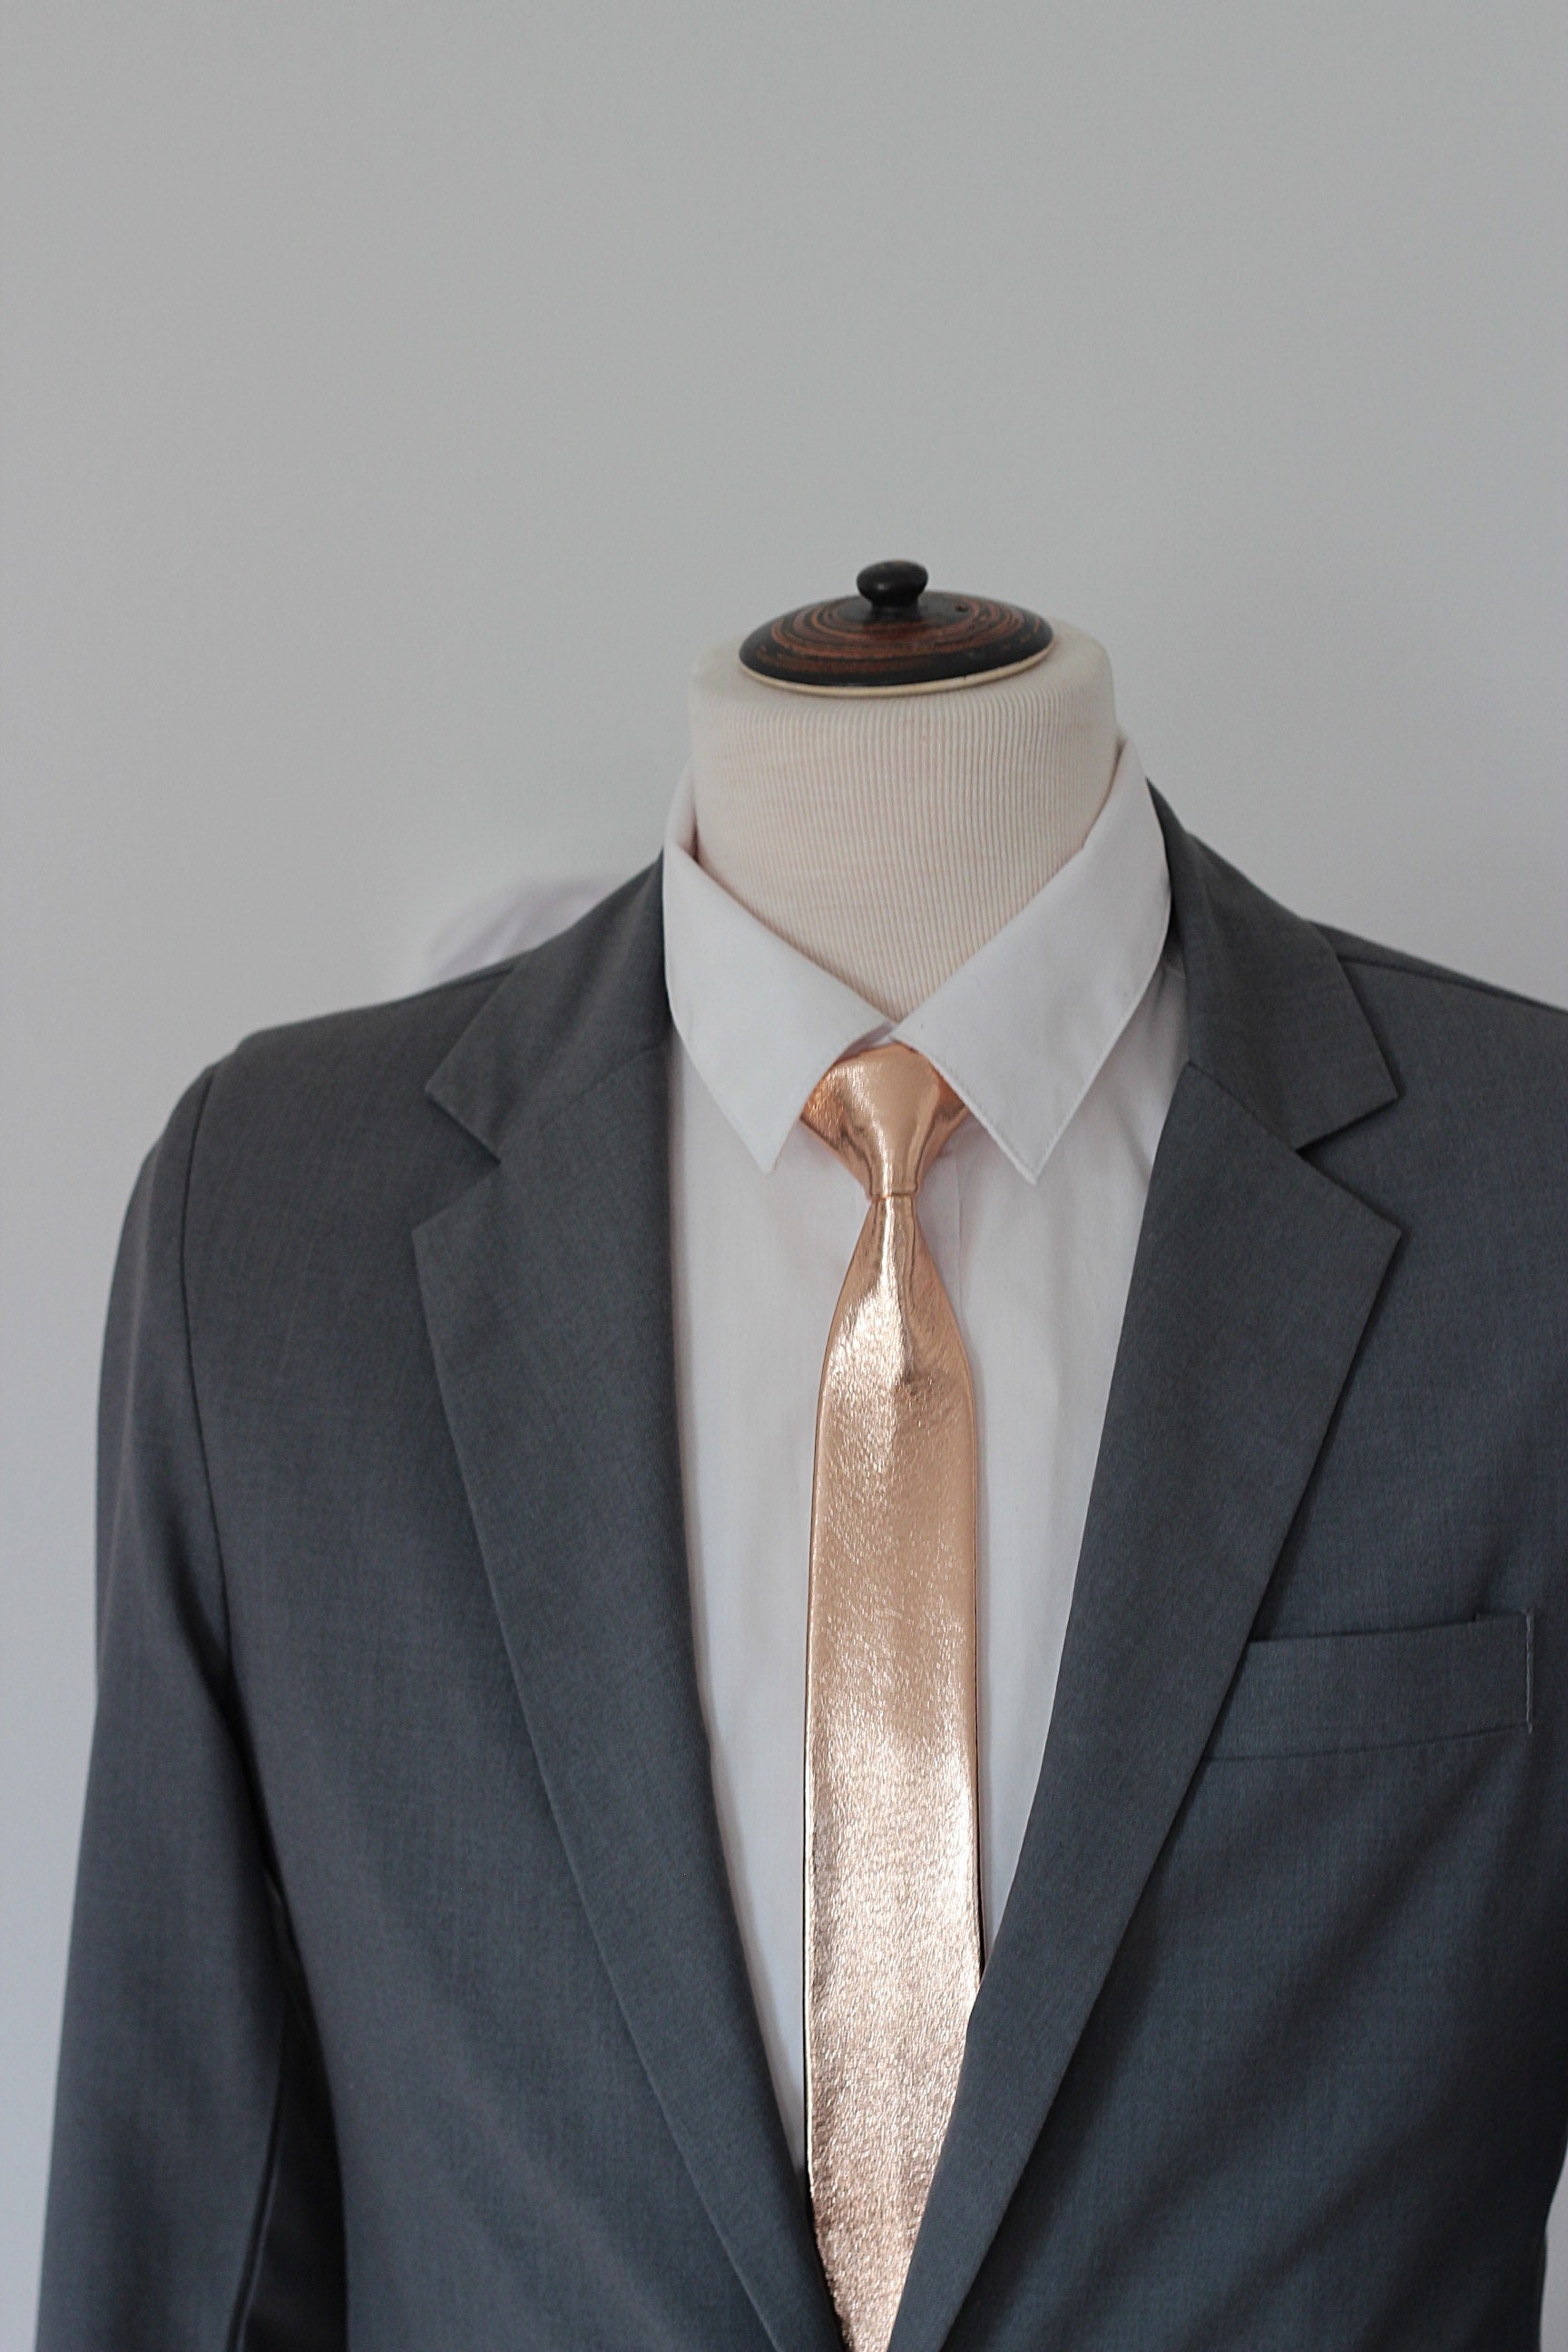 Rose Gold leather neck tie for men boys rose gold wedding | Etsy